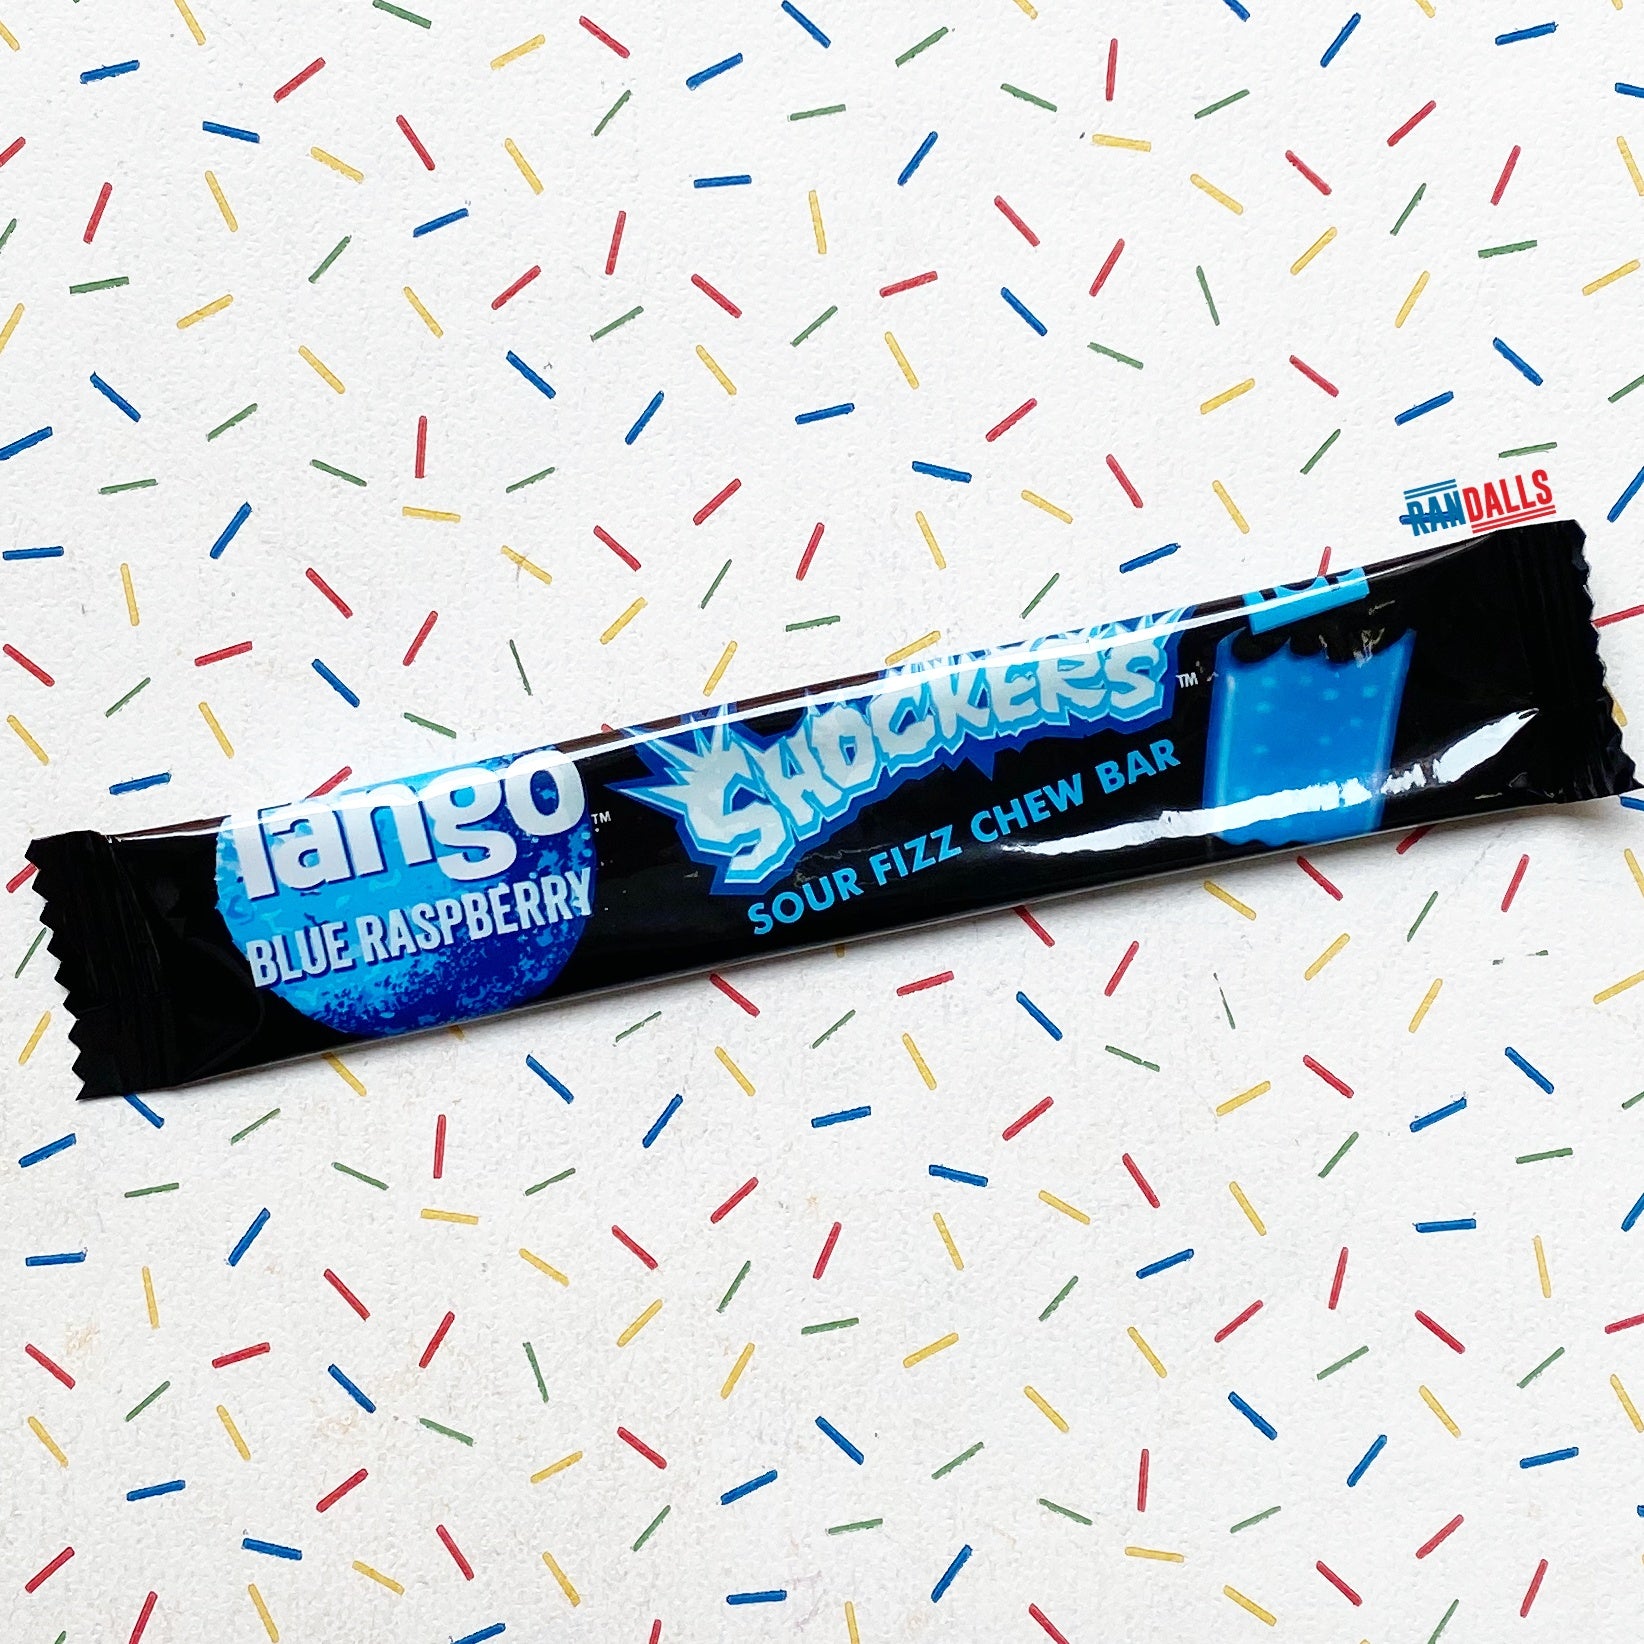 tango blue raspberry shockers, sour fizz chew bar, chewy, sour, blue raspberry, randalls